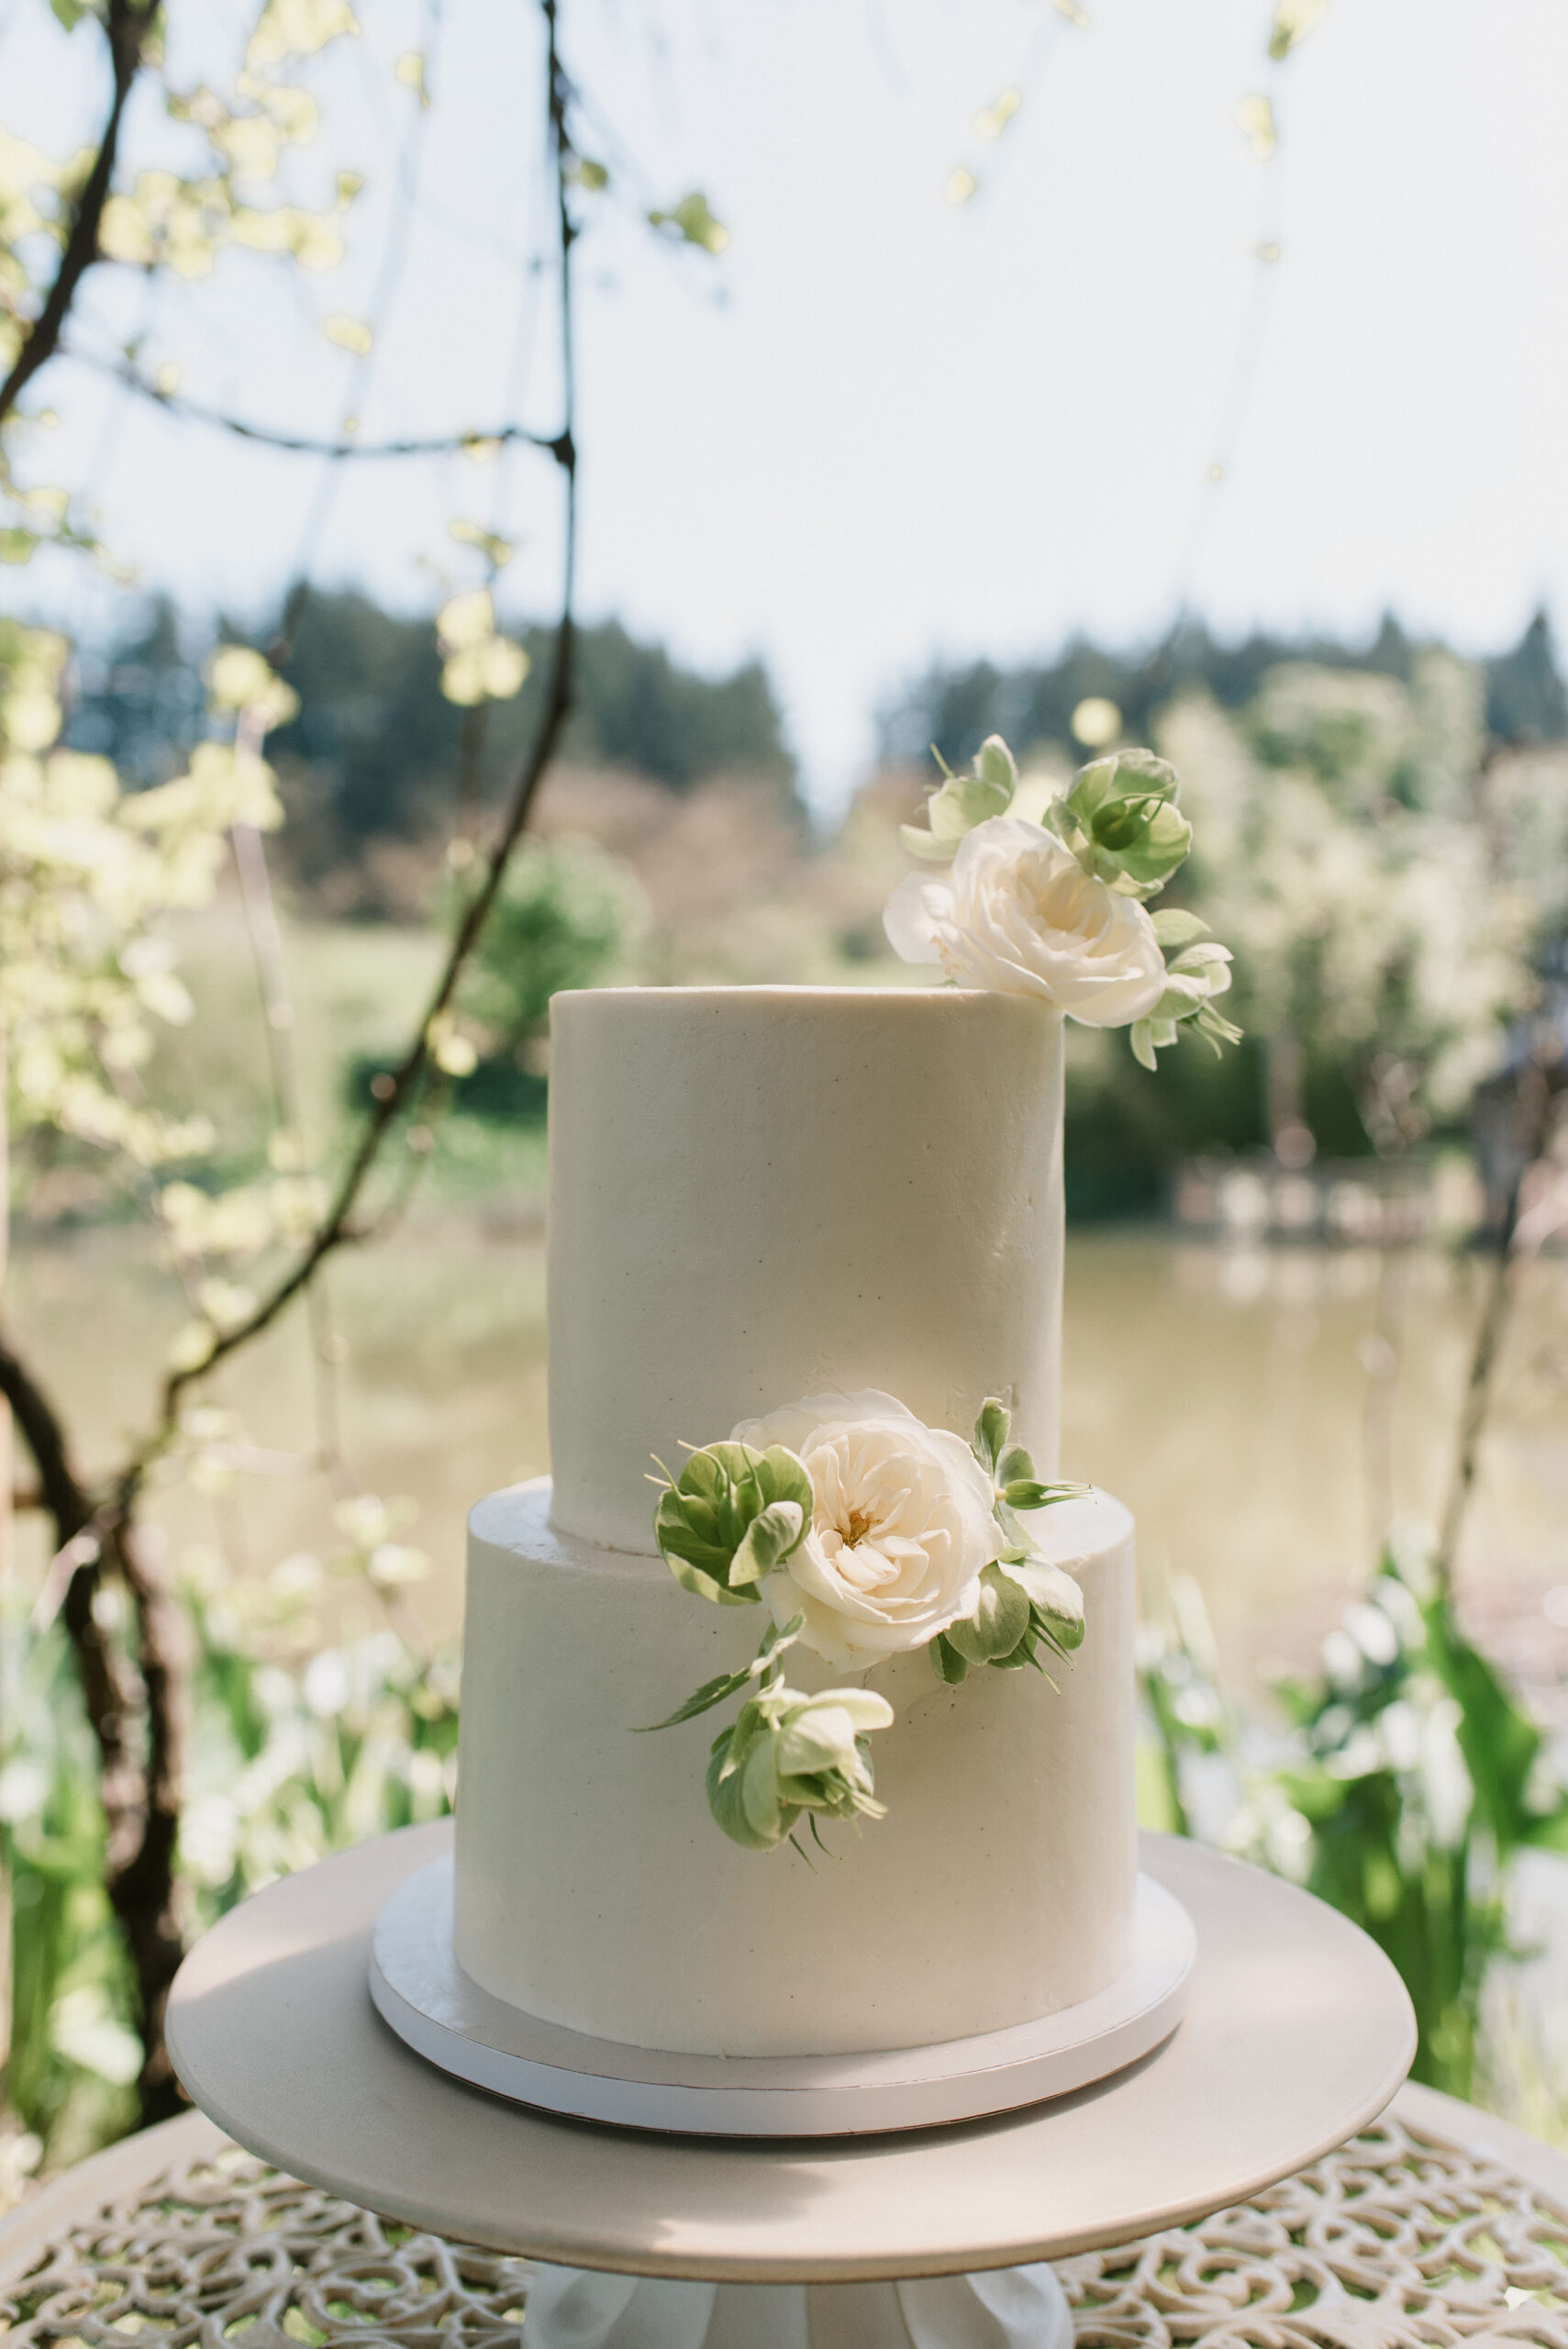 floral wedding cake from european-inspired wedding venue photos